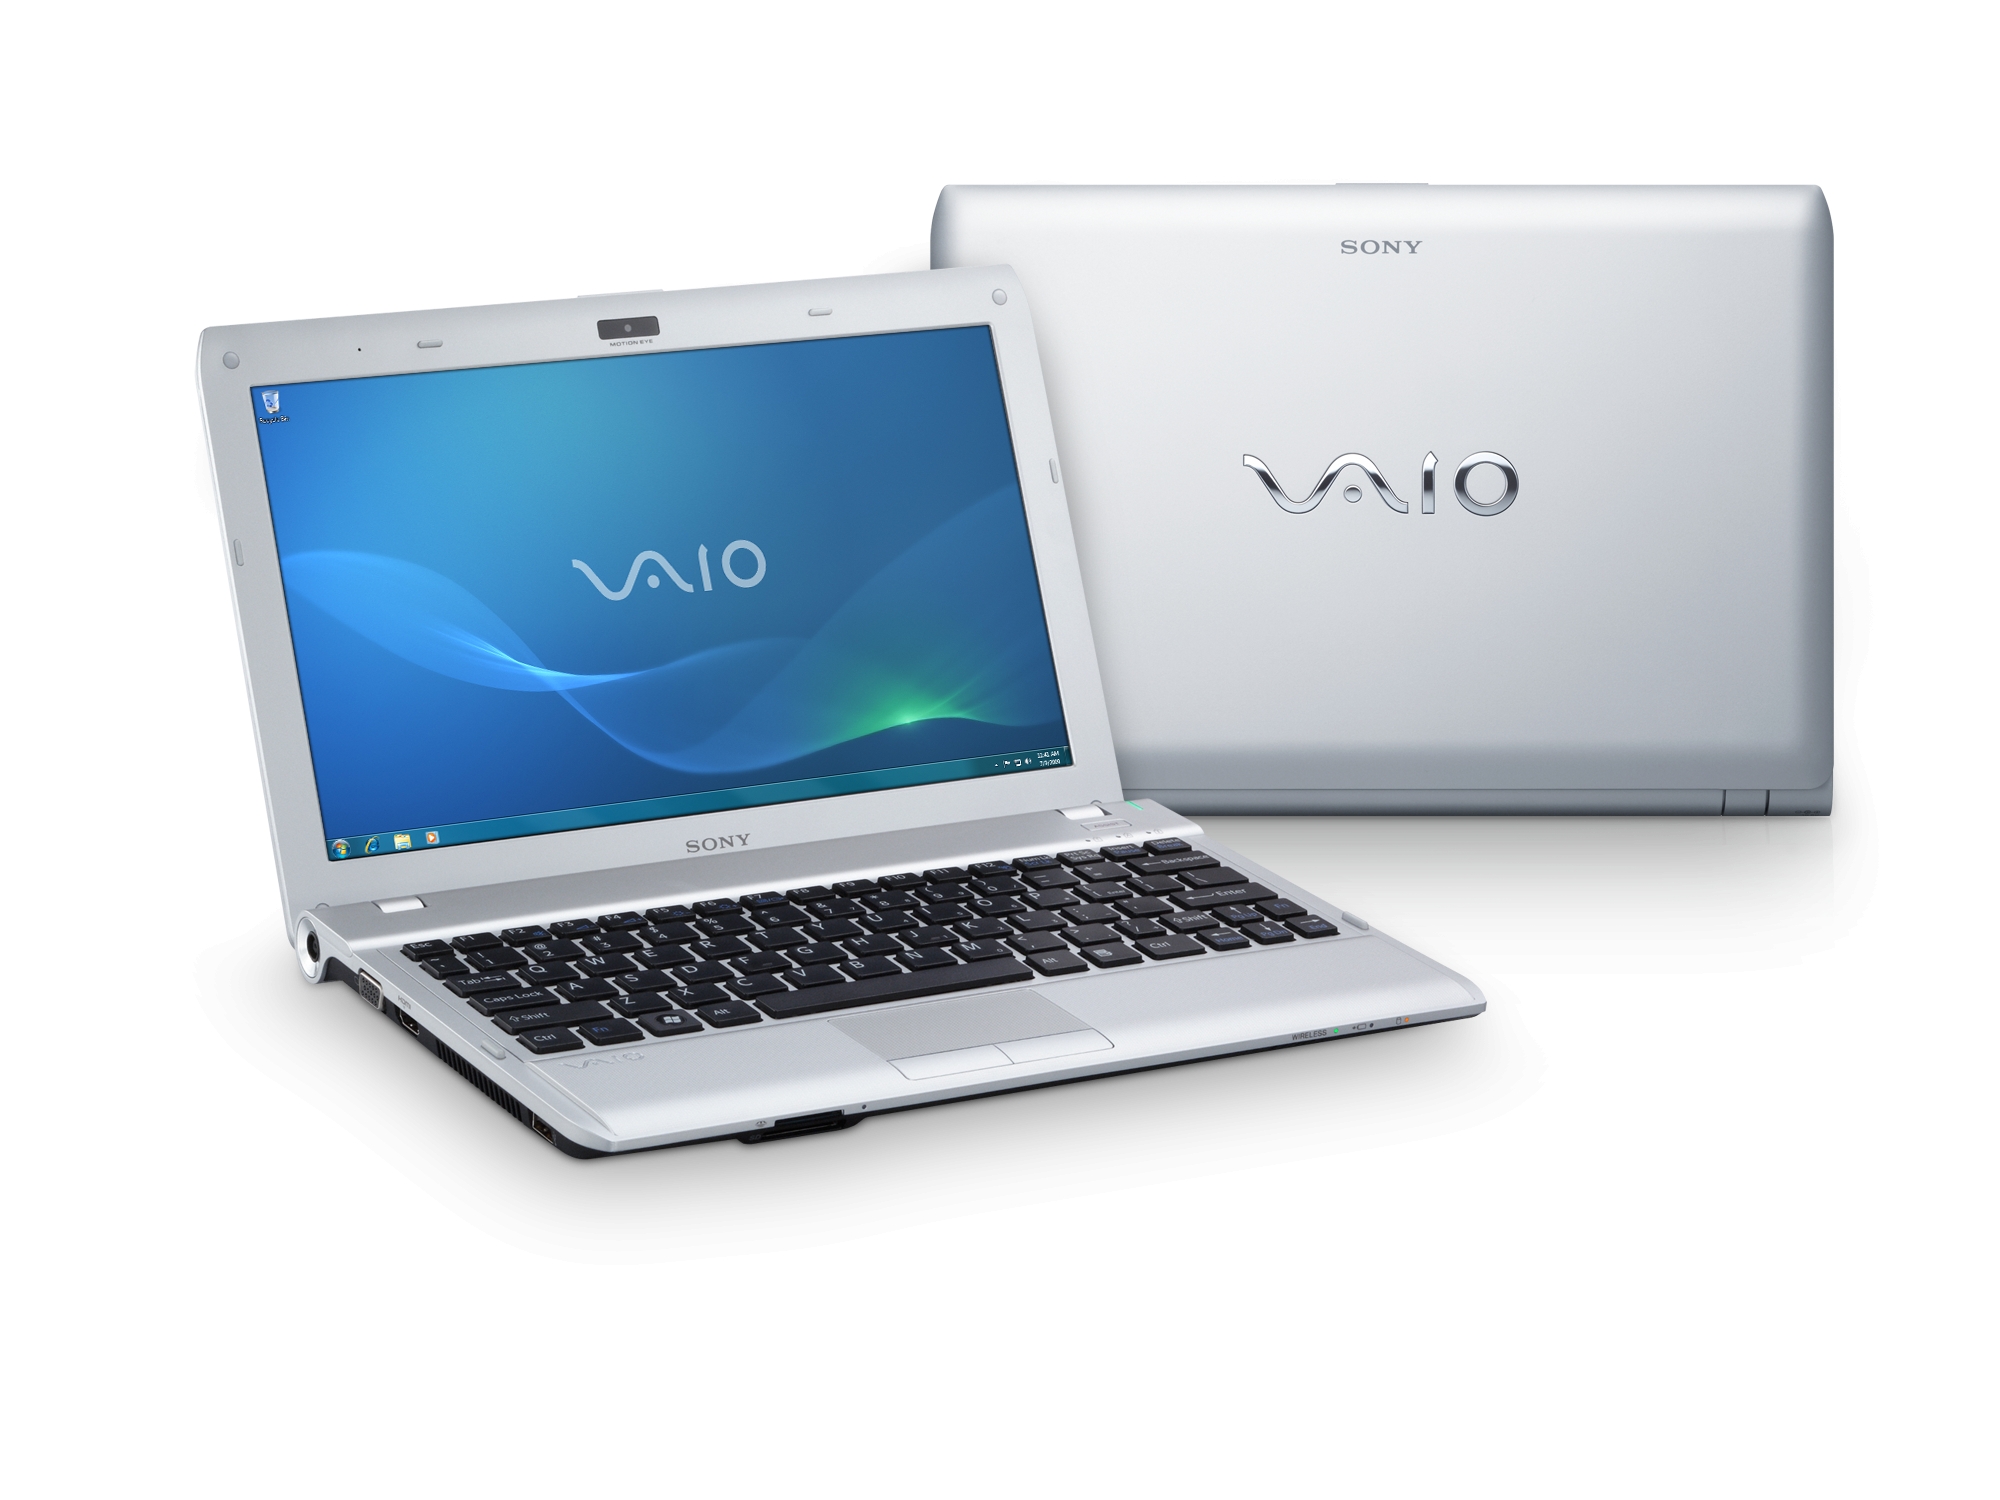 Sony'nin AMD Fusion işlemcili netbook modeli VAIO YB satışa sunuldu